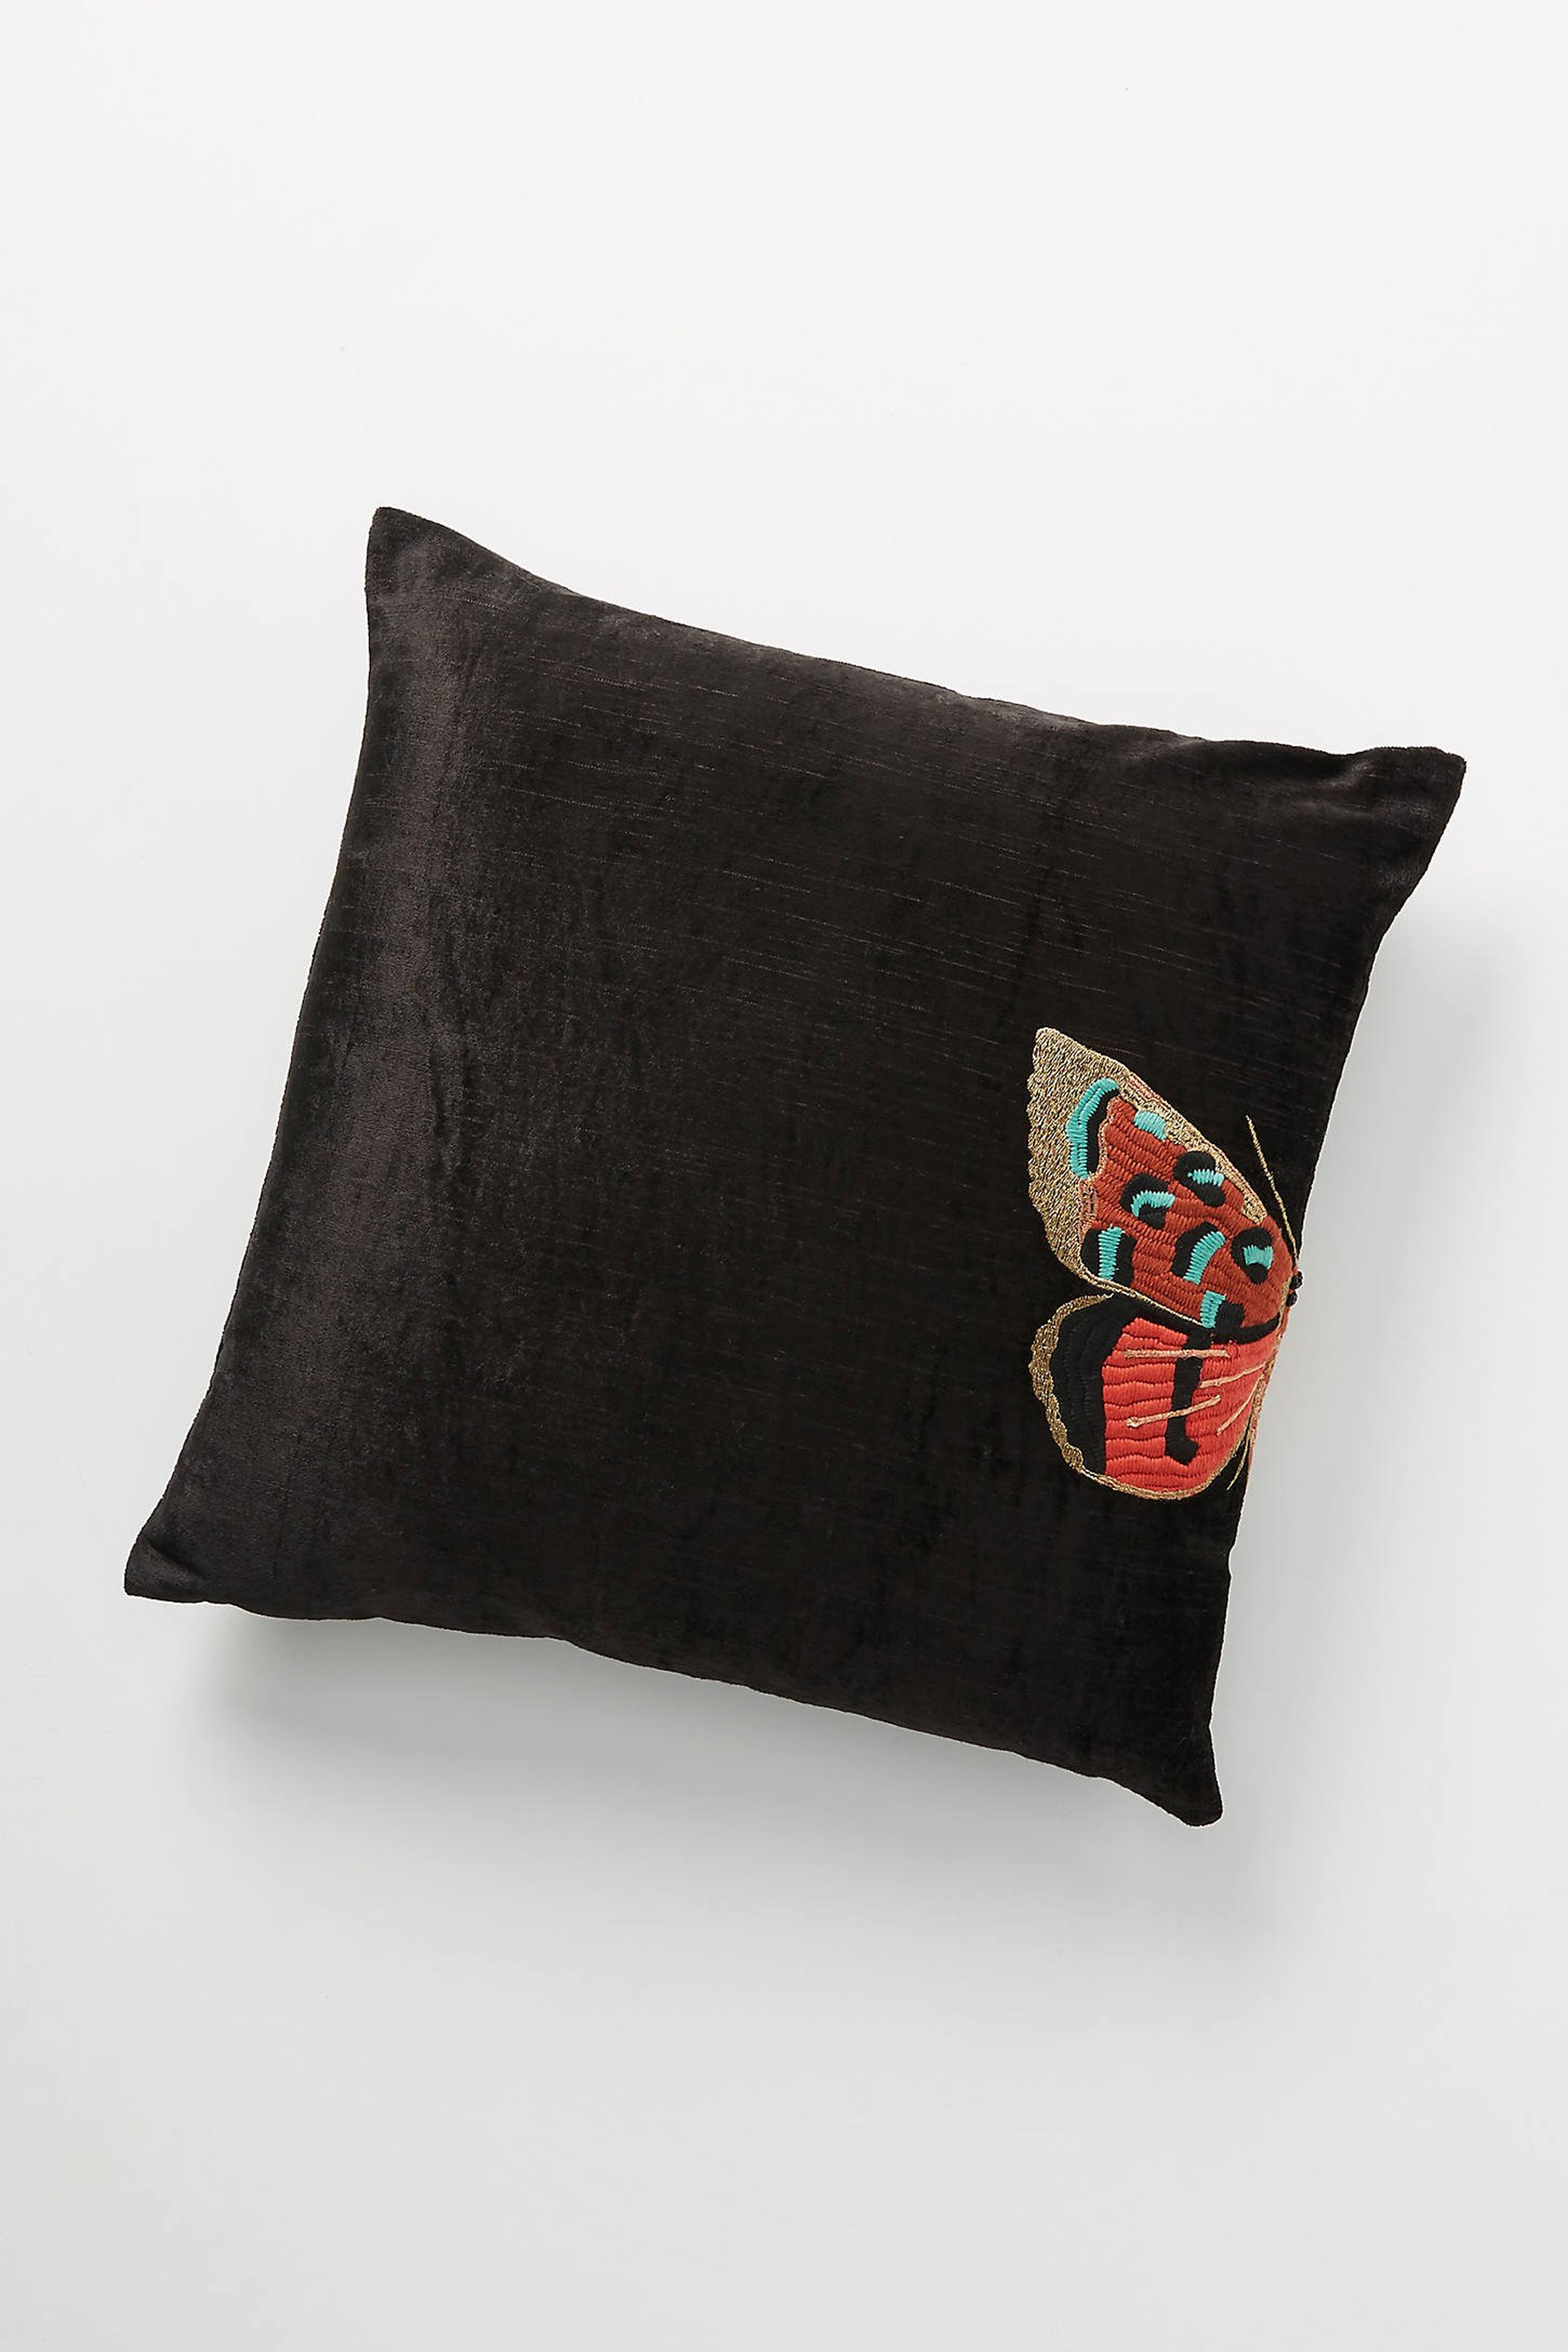 Embellished Isadora Pillow - Anthropologie